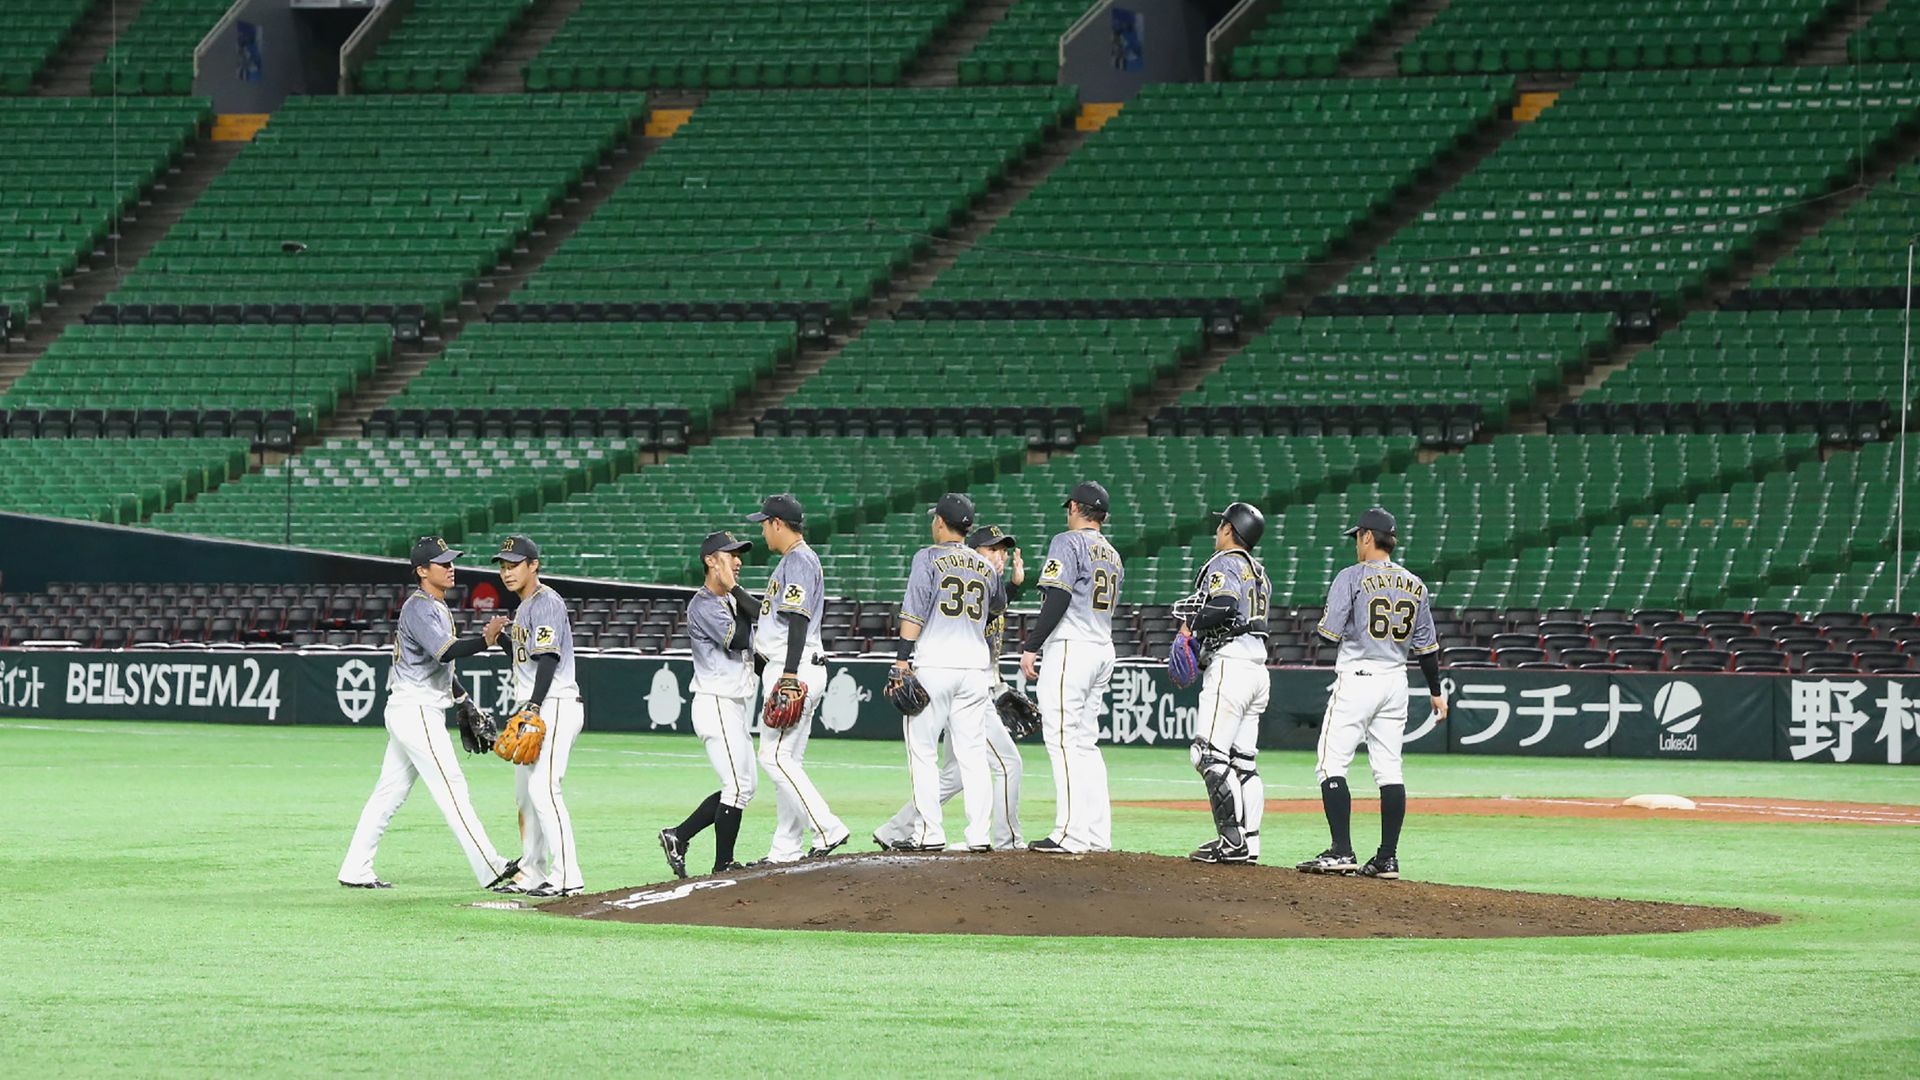 Players celebrate in empty baseball stadium